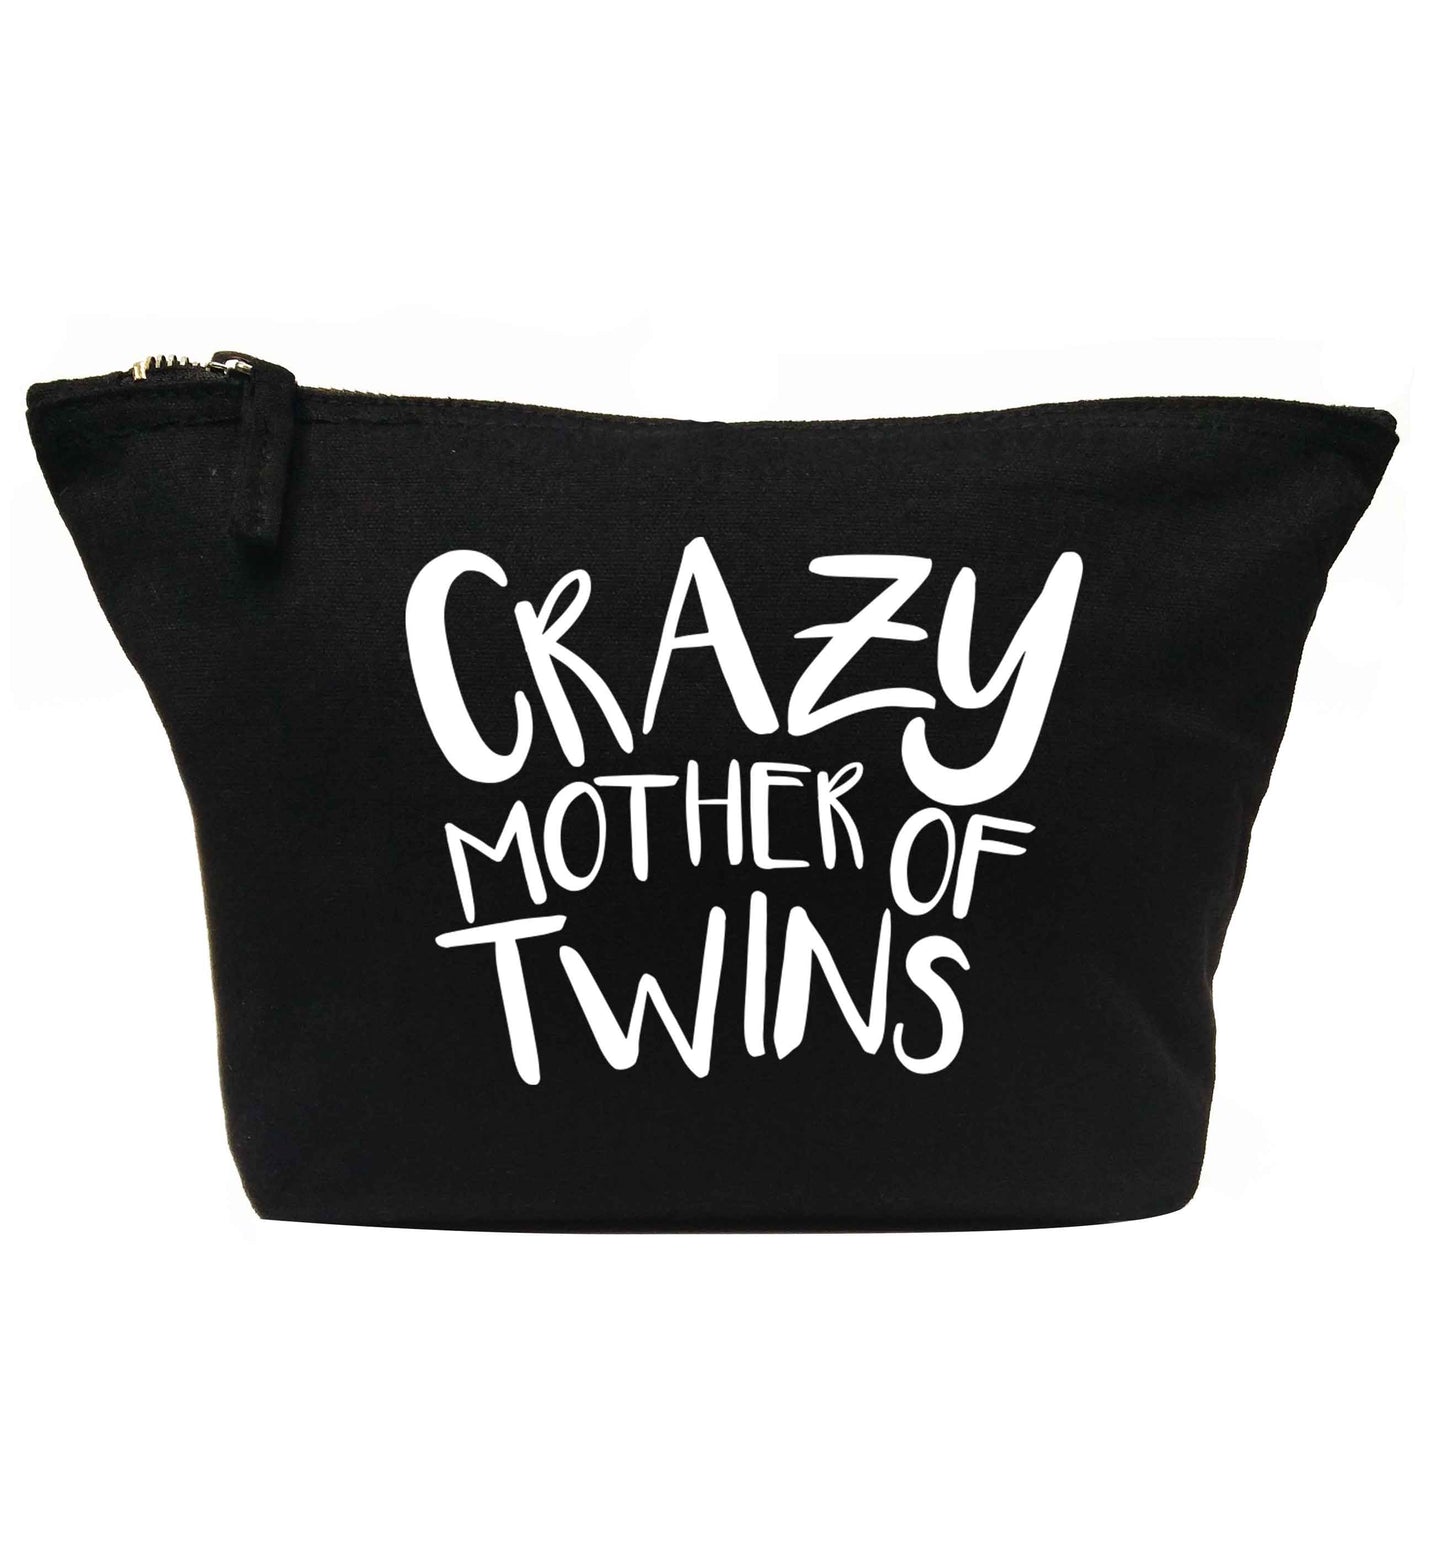 Crazy mother of twins | Makeup / wash bag